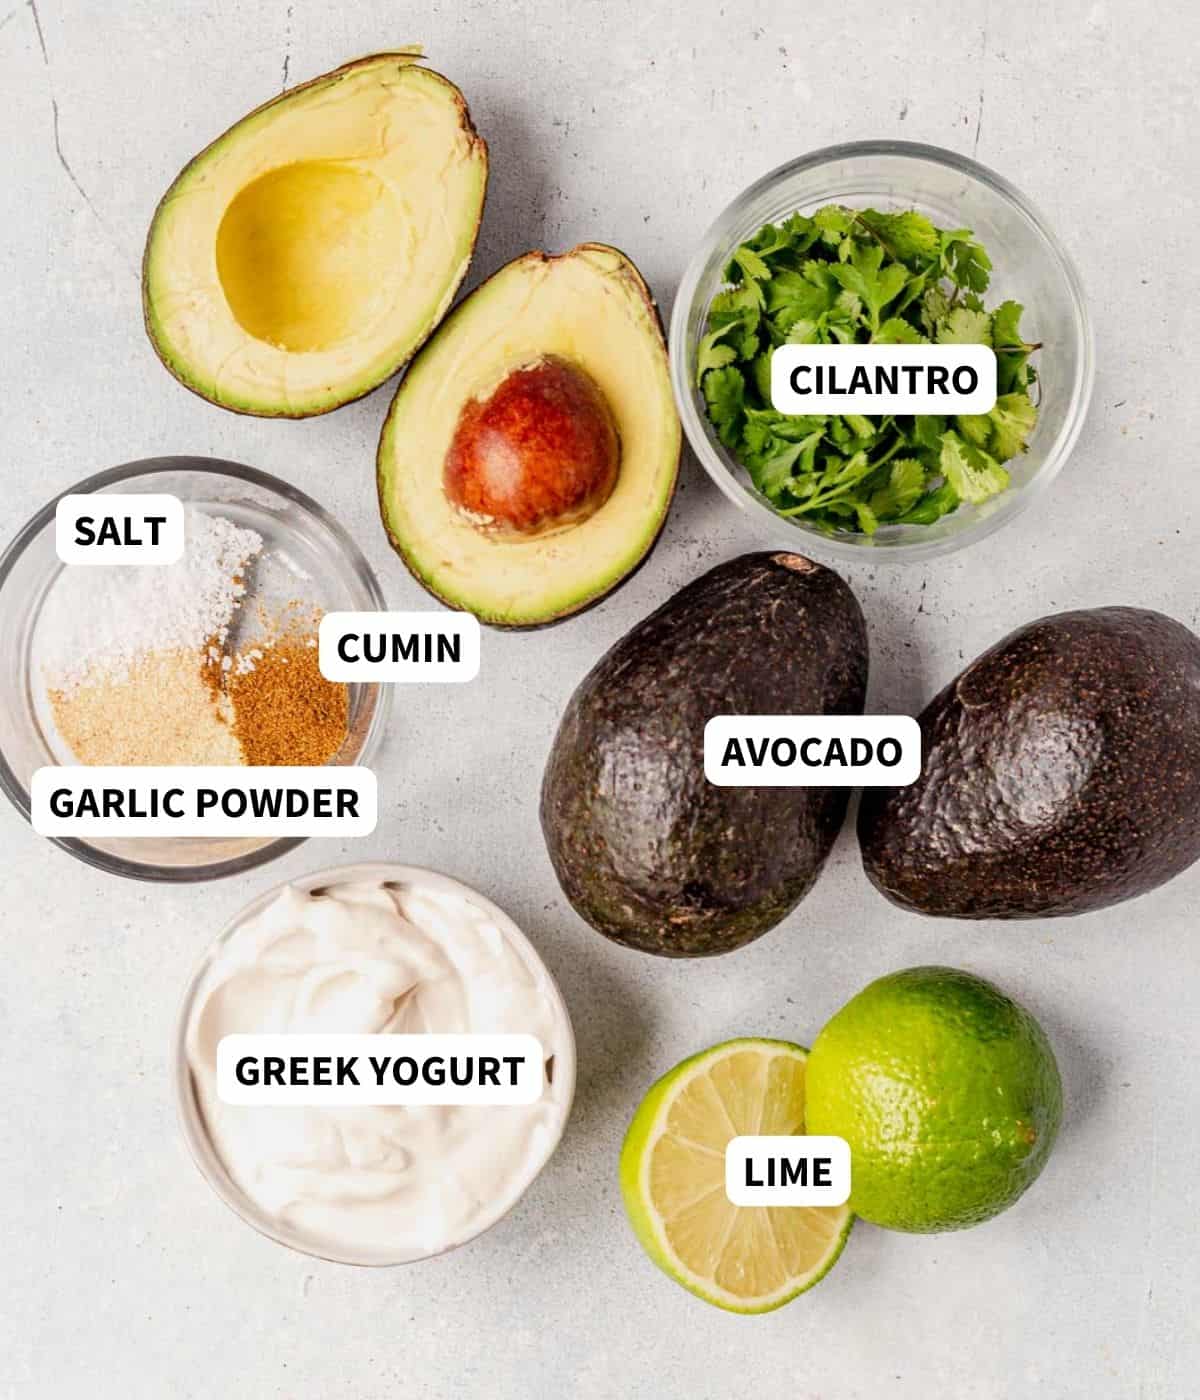 avocado, greek yogurt, cilantro, lime, and spices